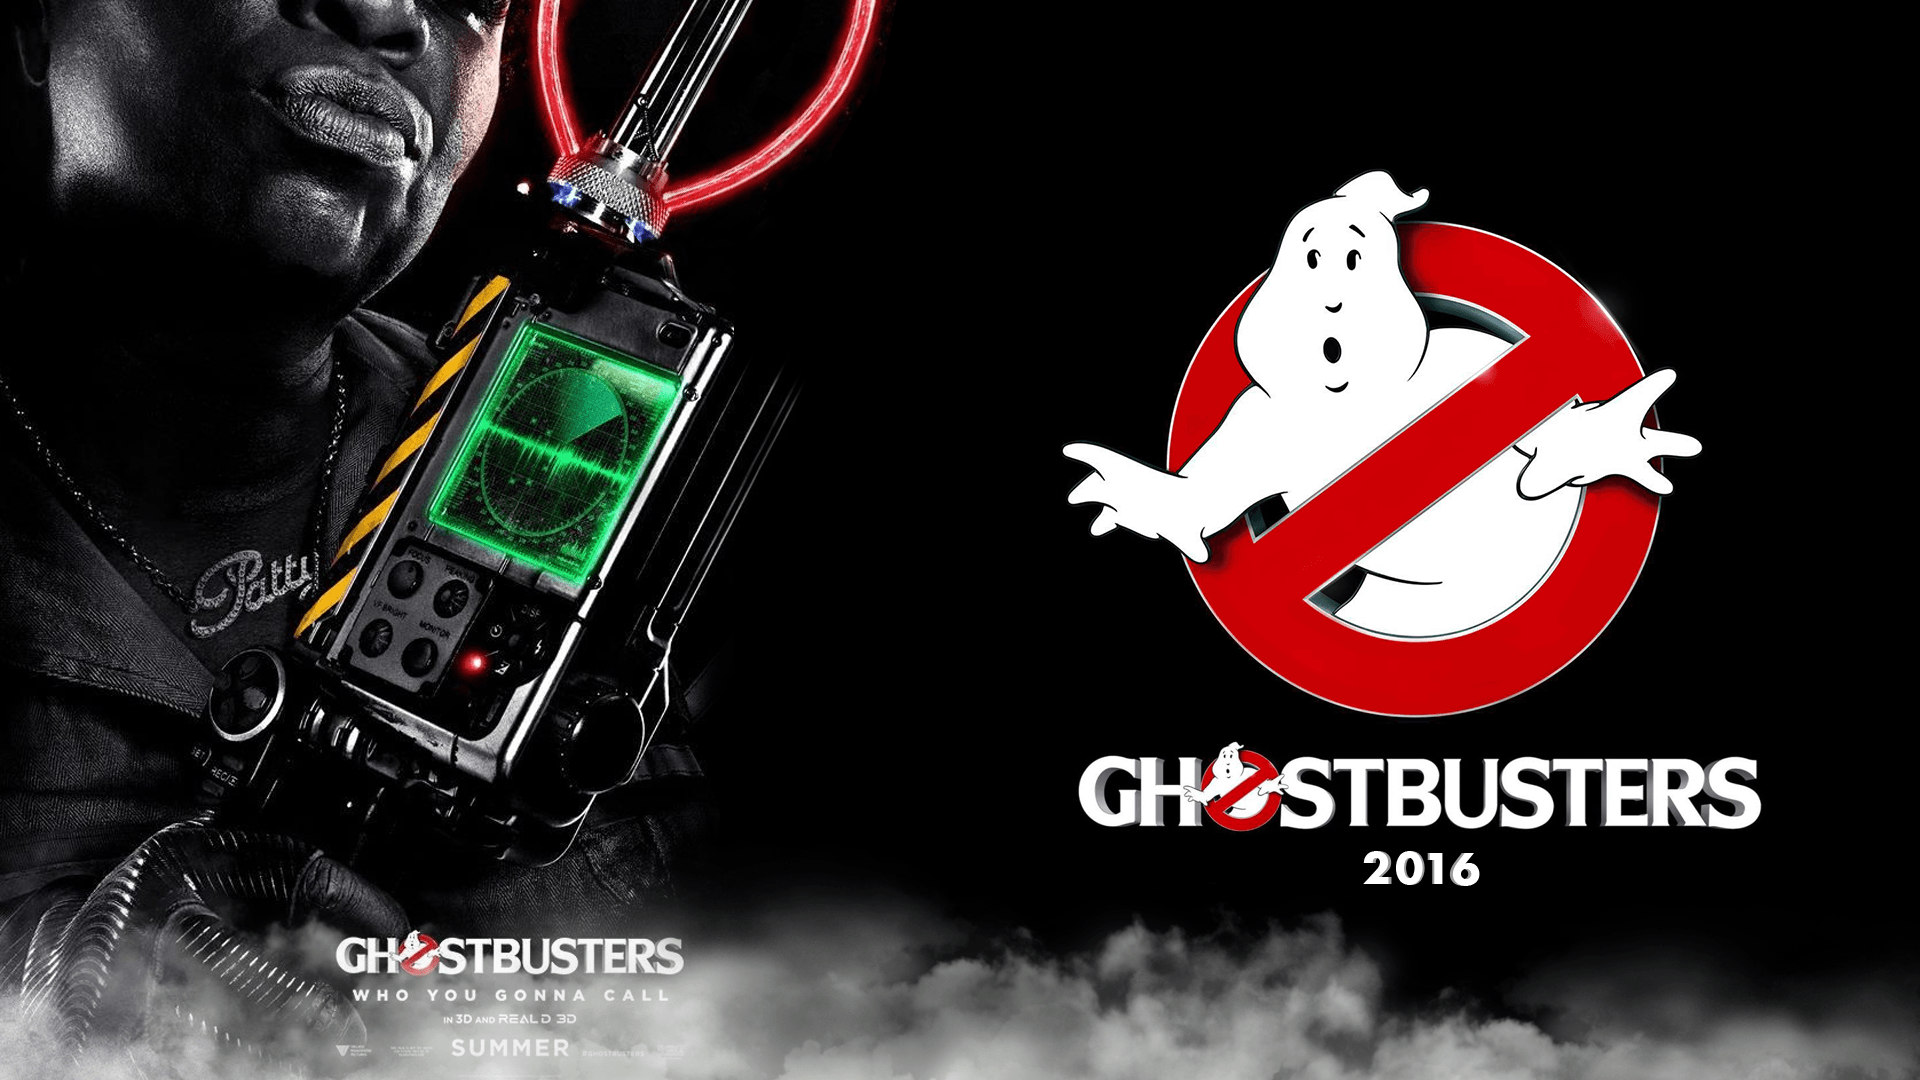 Ghostbusters 2016 Wallpaper